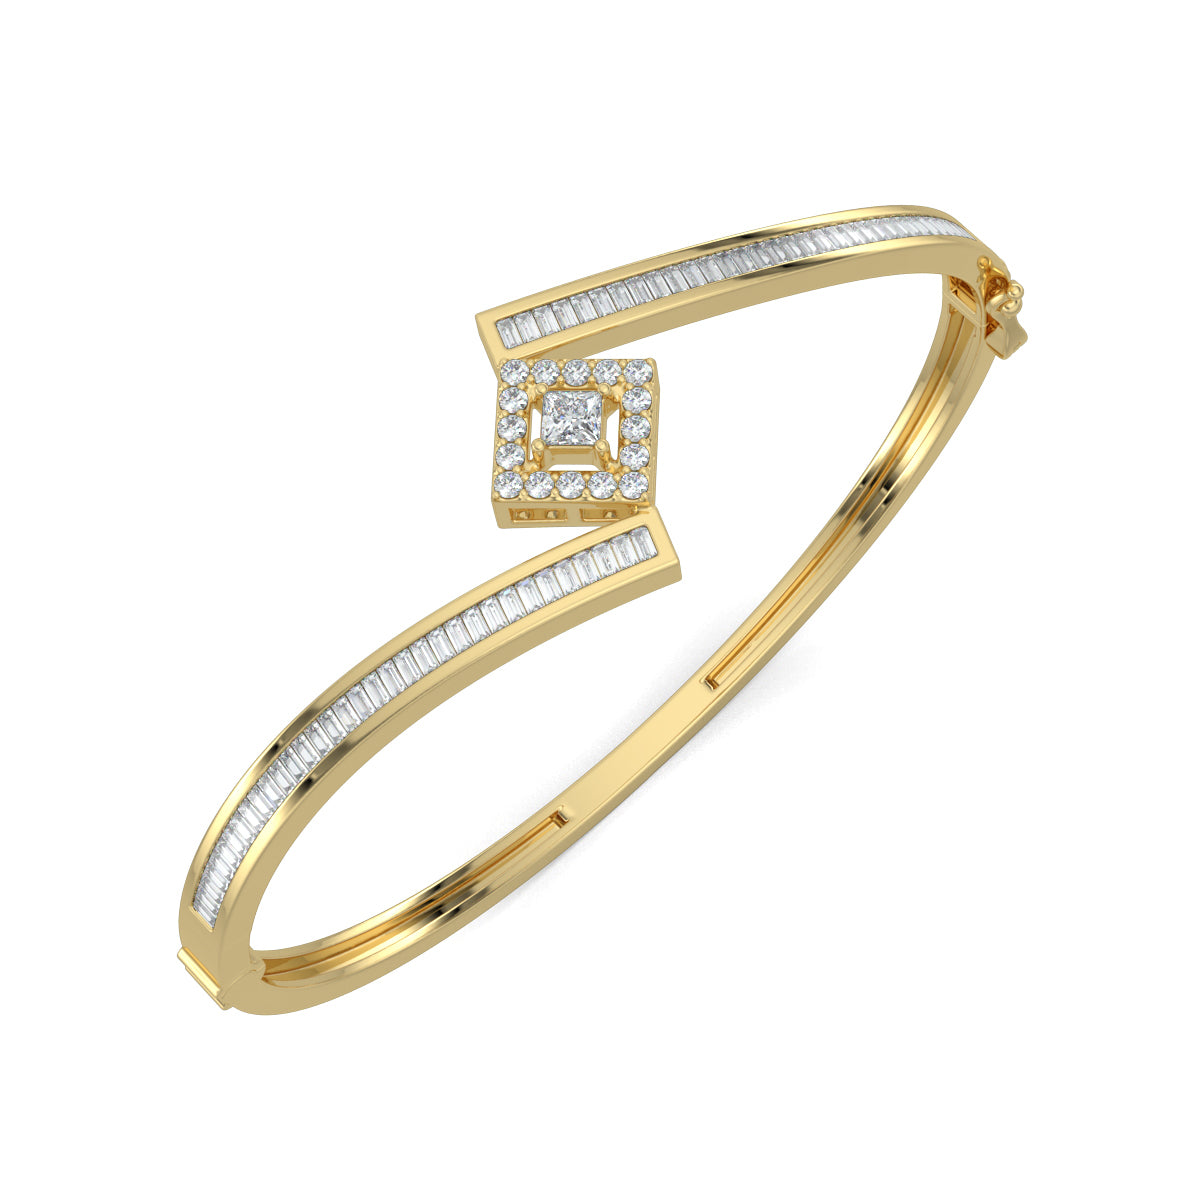 Yellow Gold, Diamond Bracelet, Seraphic Splendor Diamond Bracelet, natural diamonds, lab-grown diamonds, bypass bracelet, baguette channeling, princess cut diamond, halo setting